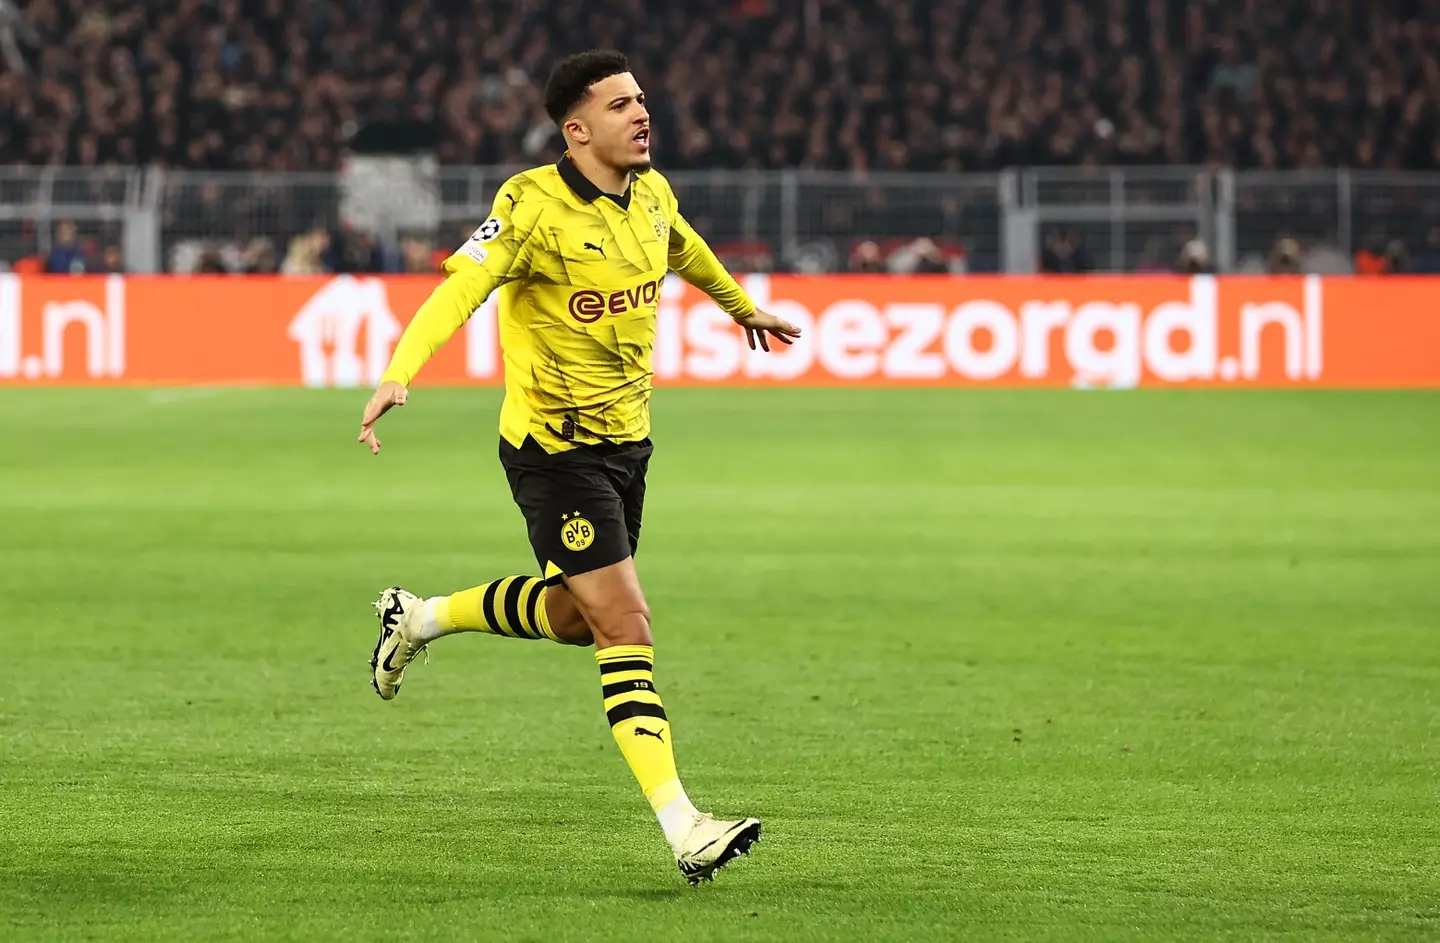 Jadon Sancho wheels away in celebration after scoring a goal for Borussia Dortmund. Image: Getty